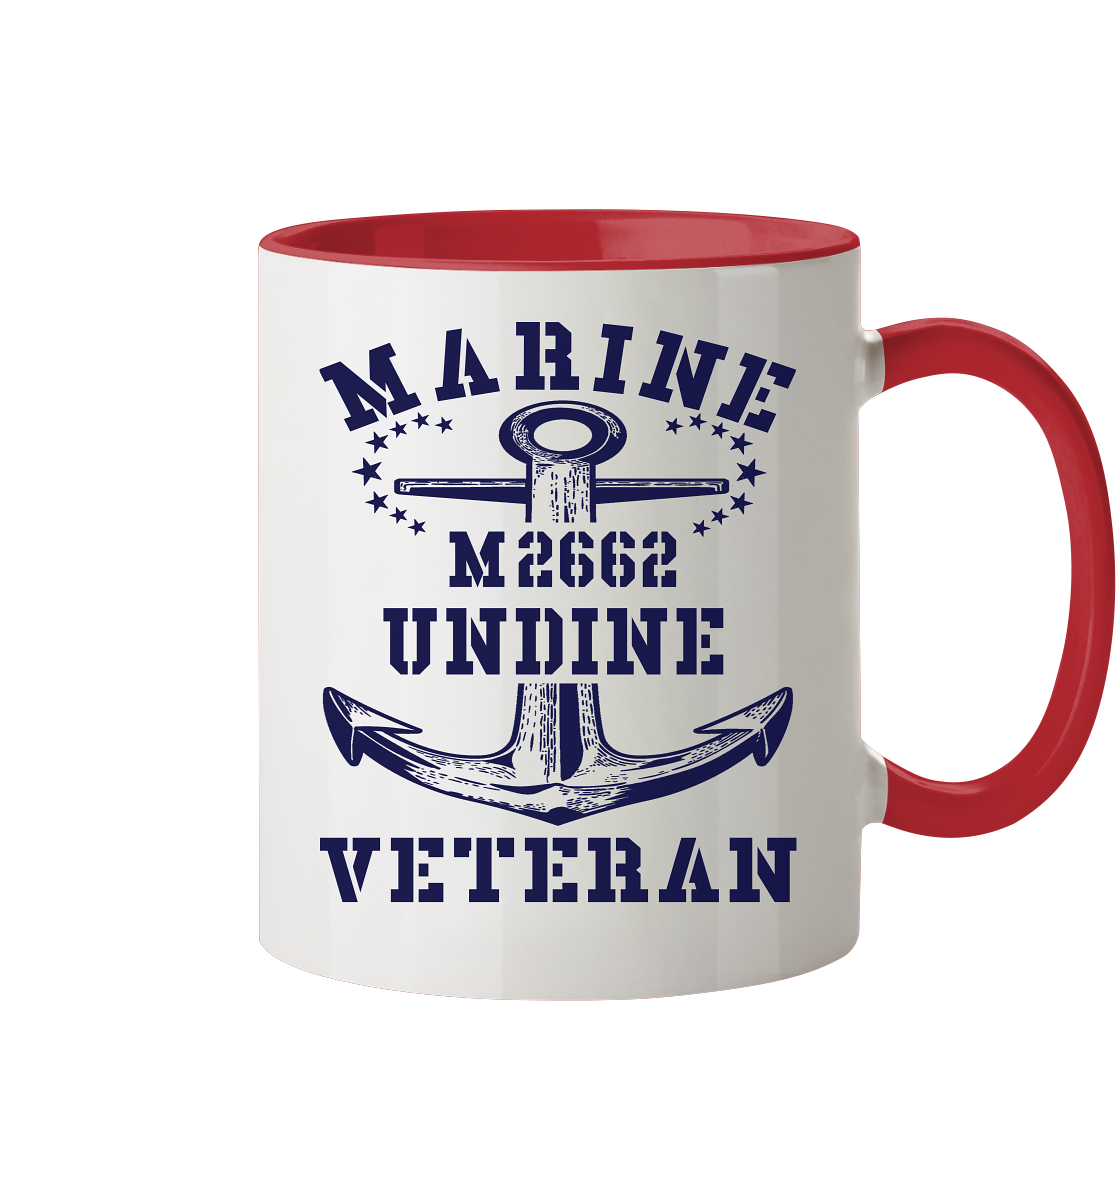 BiMi M2662 UNDINE Marine Veteran - Tasse zweifarbig